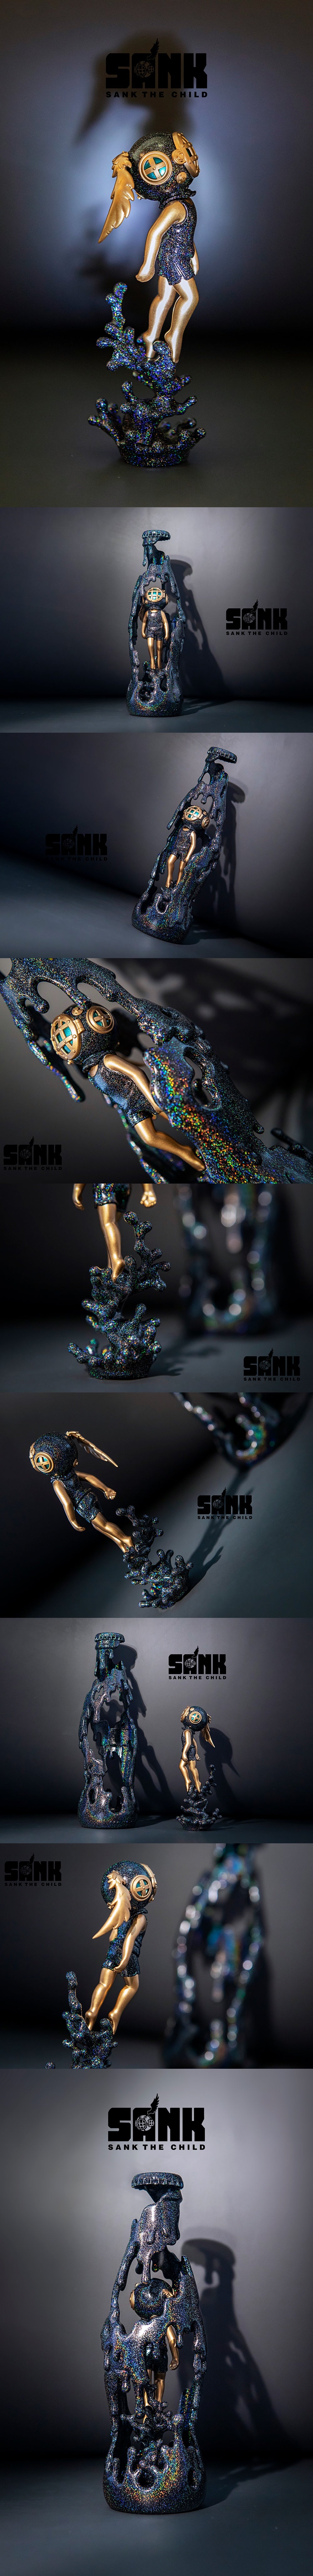 Sank Toys The Shape Undercurrent Collectible Figurine